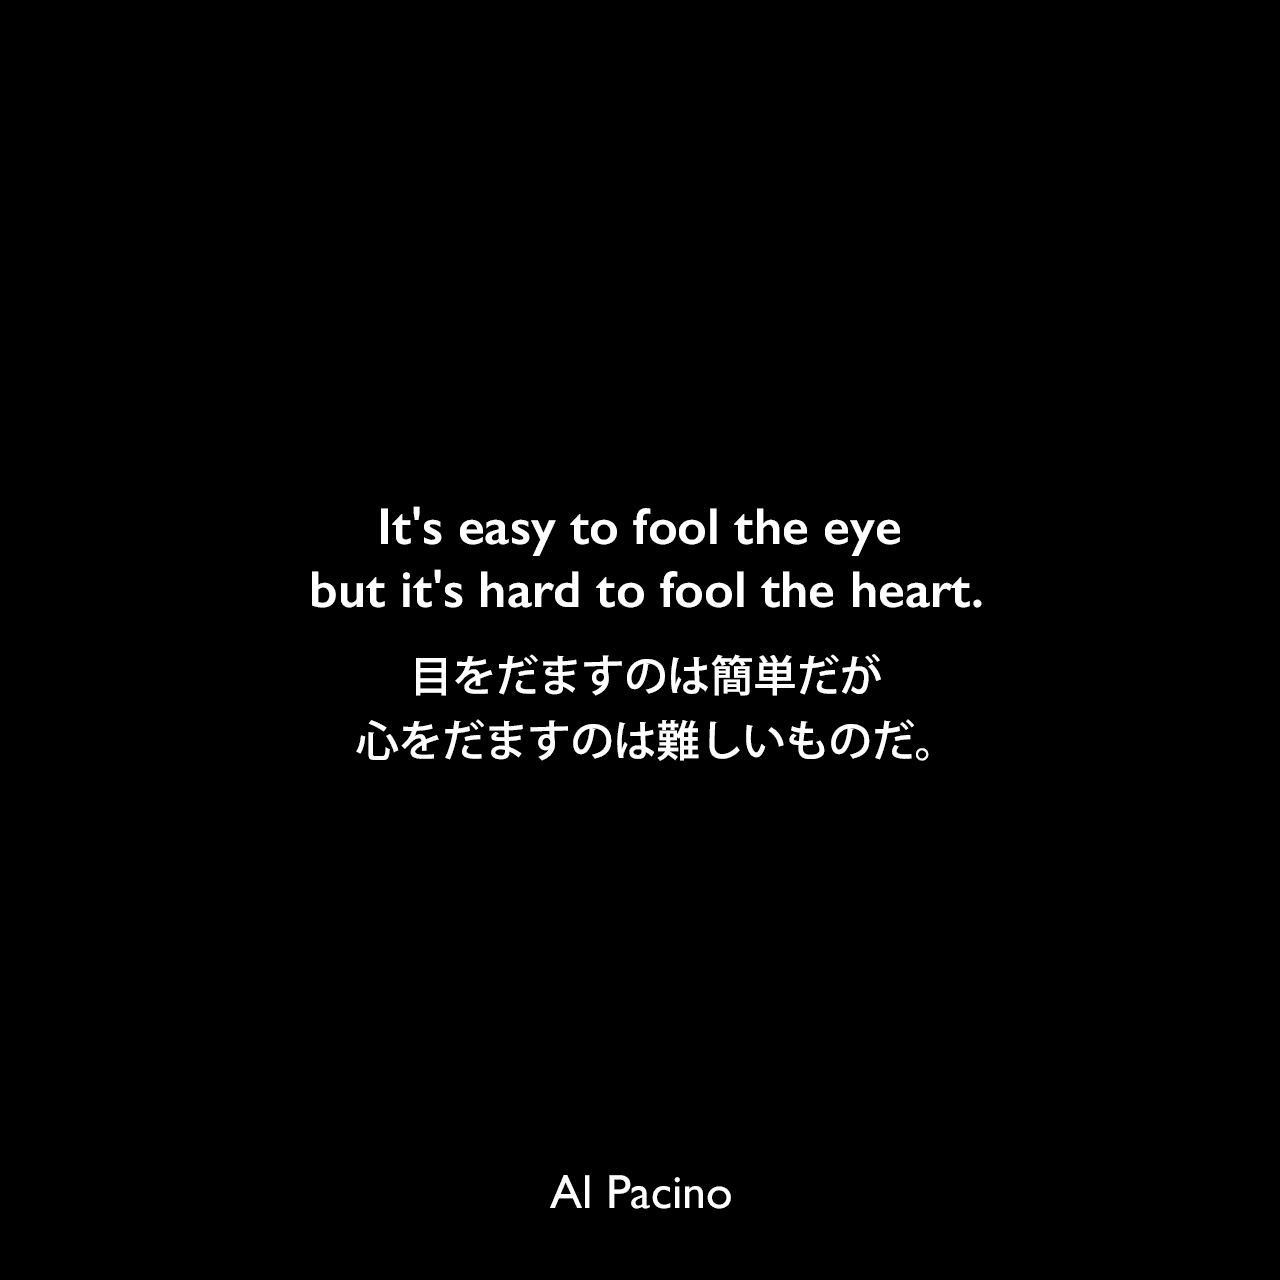 It's easy to fool the eye but it's hard to fool the heart.目をだますのは簡単だが、心をだますのは難しいものだ。Al Pacino